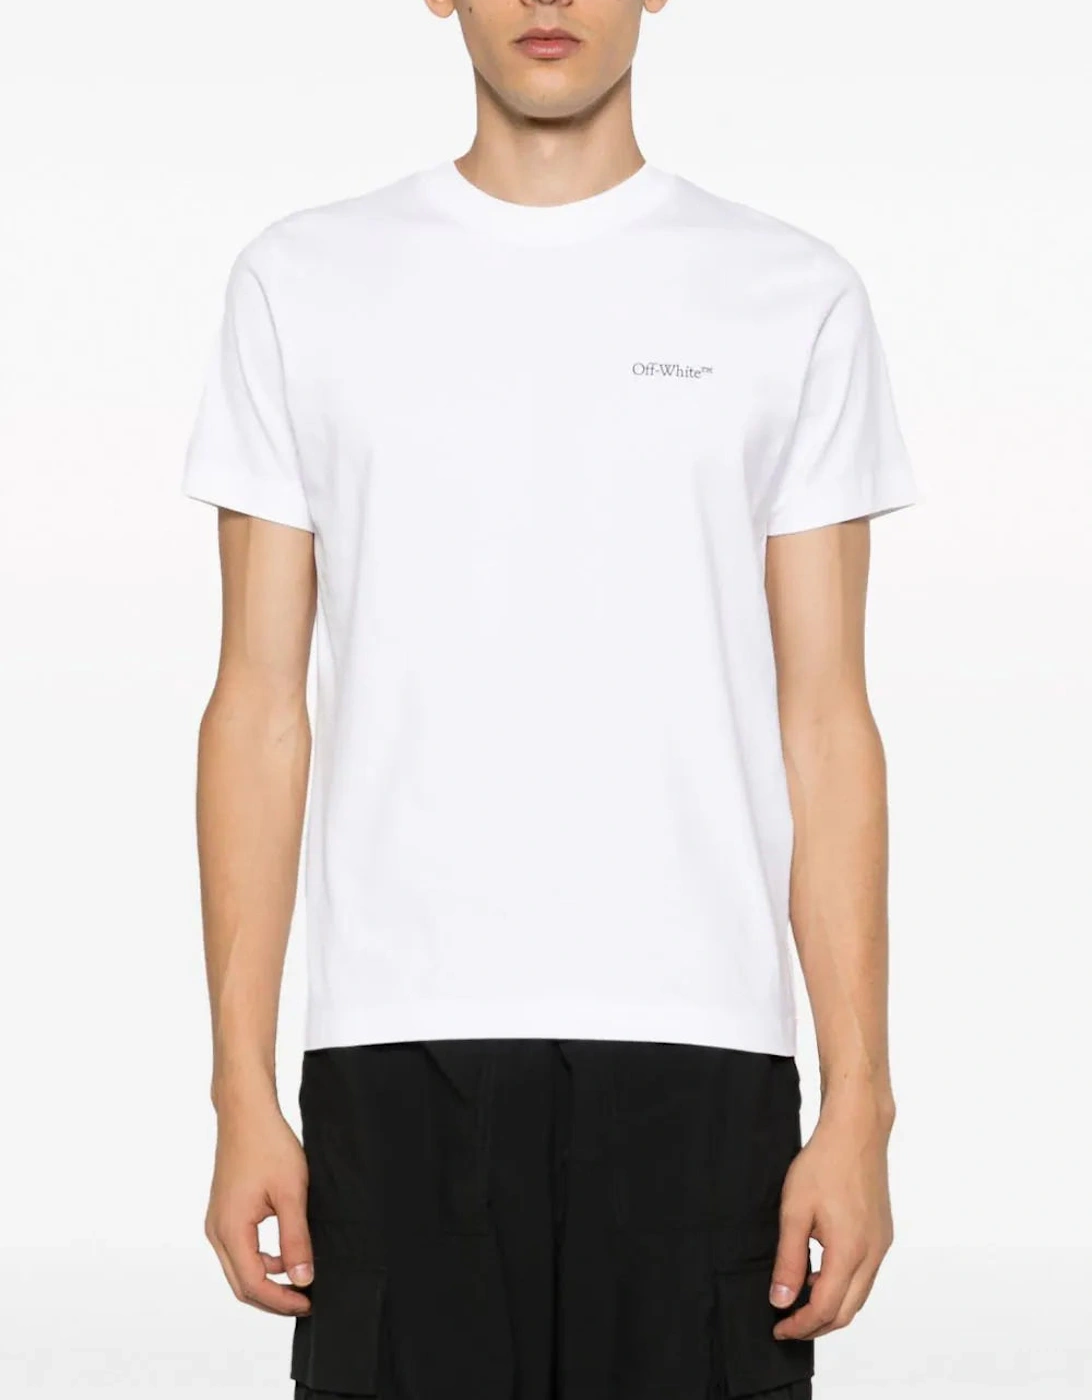 Scratch Arrow Logo Print T-Shirt in White